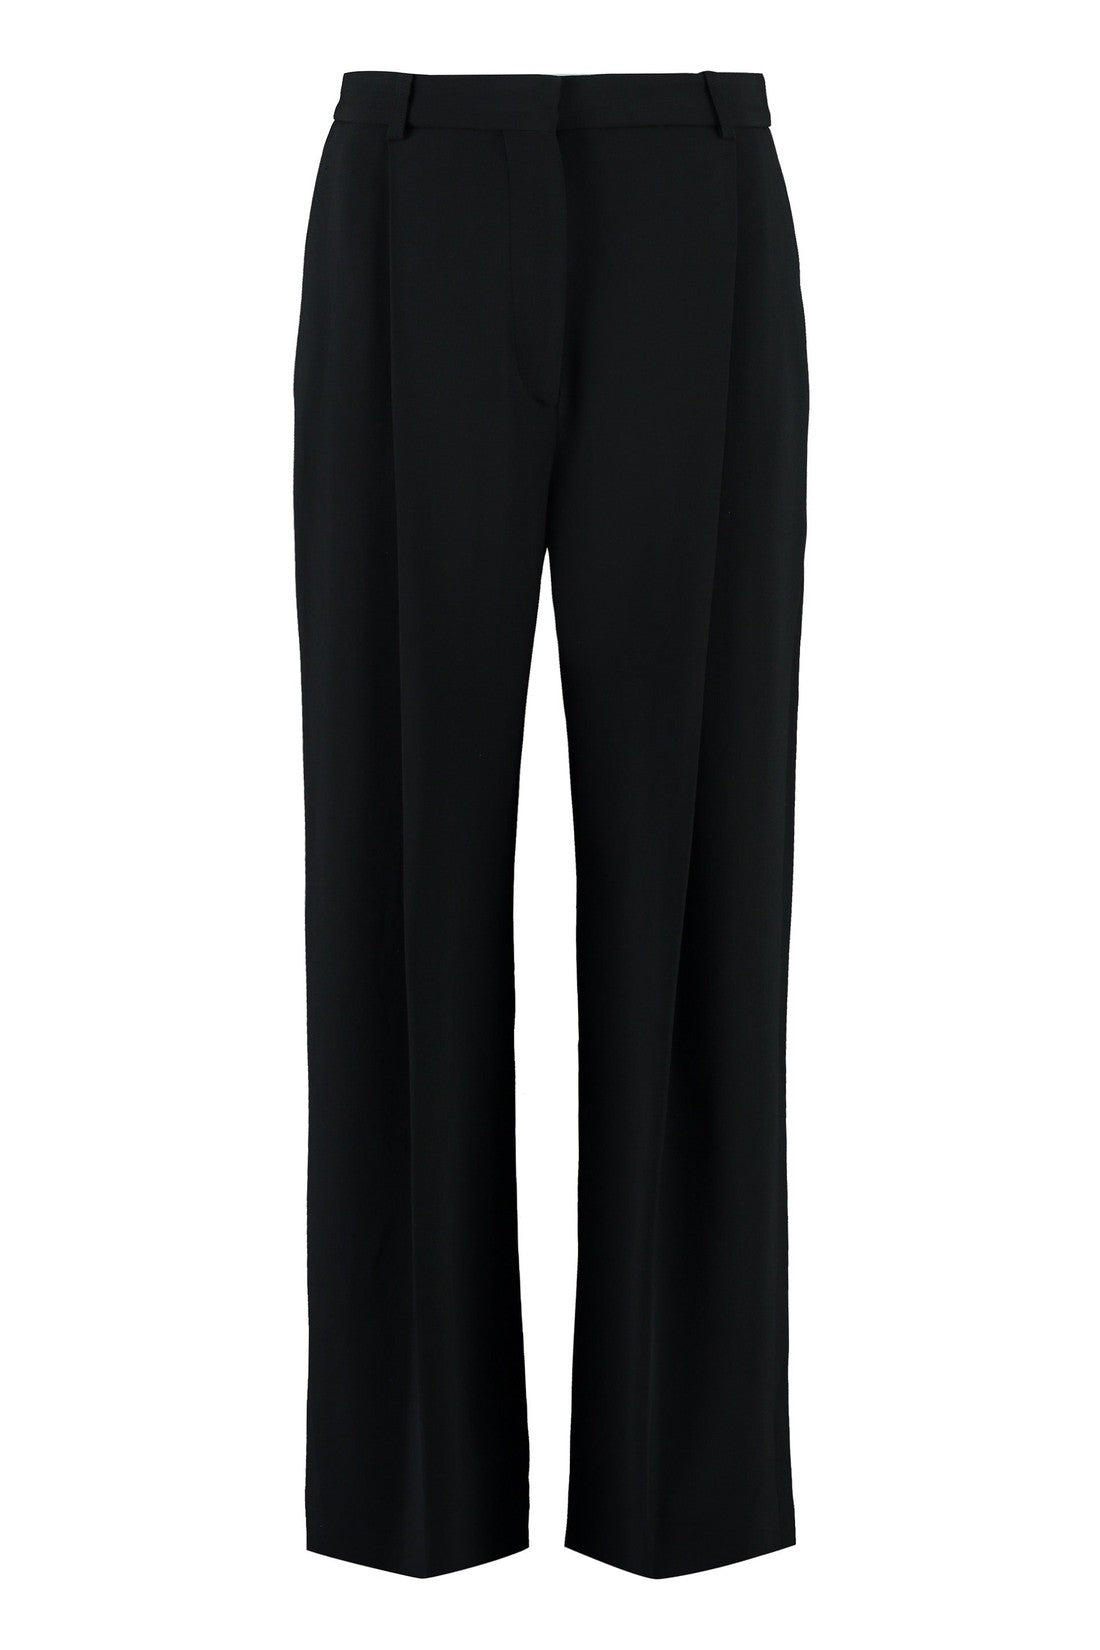 Victoria Beckham-OUTLET-SALE-Jersey trousers-ARCHIVIST